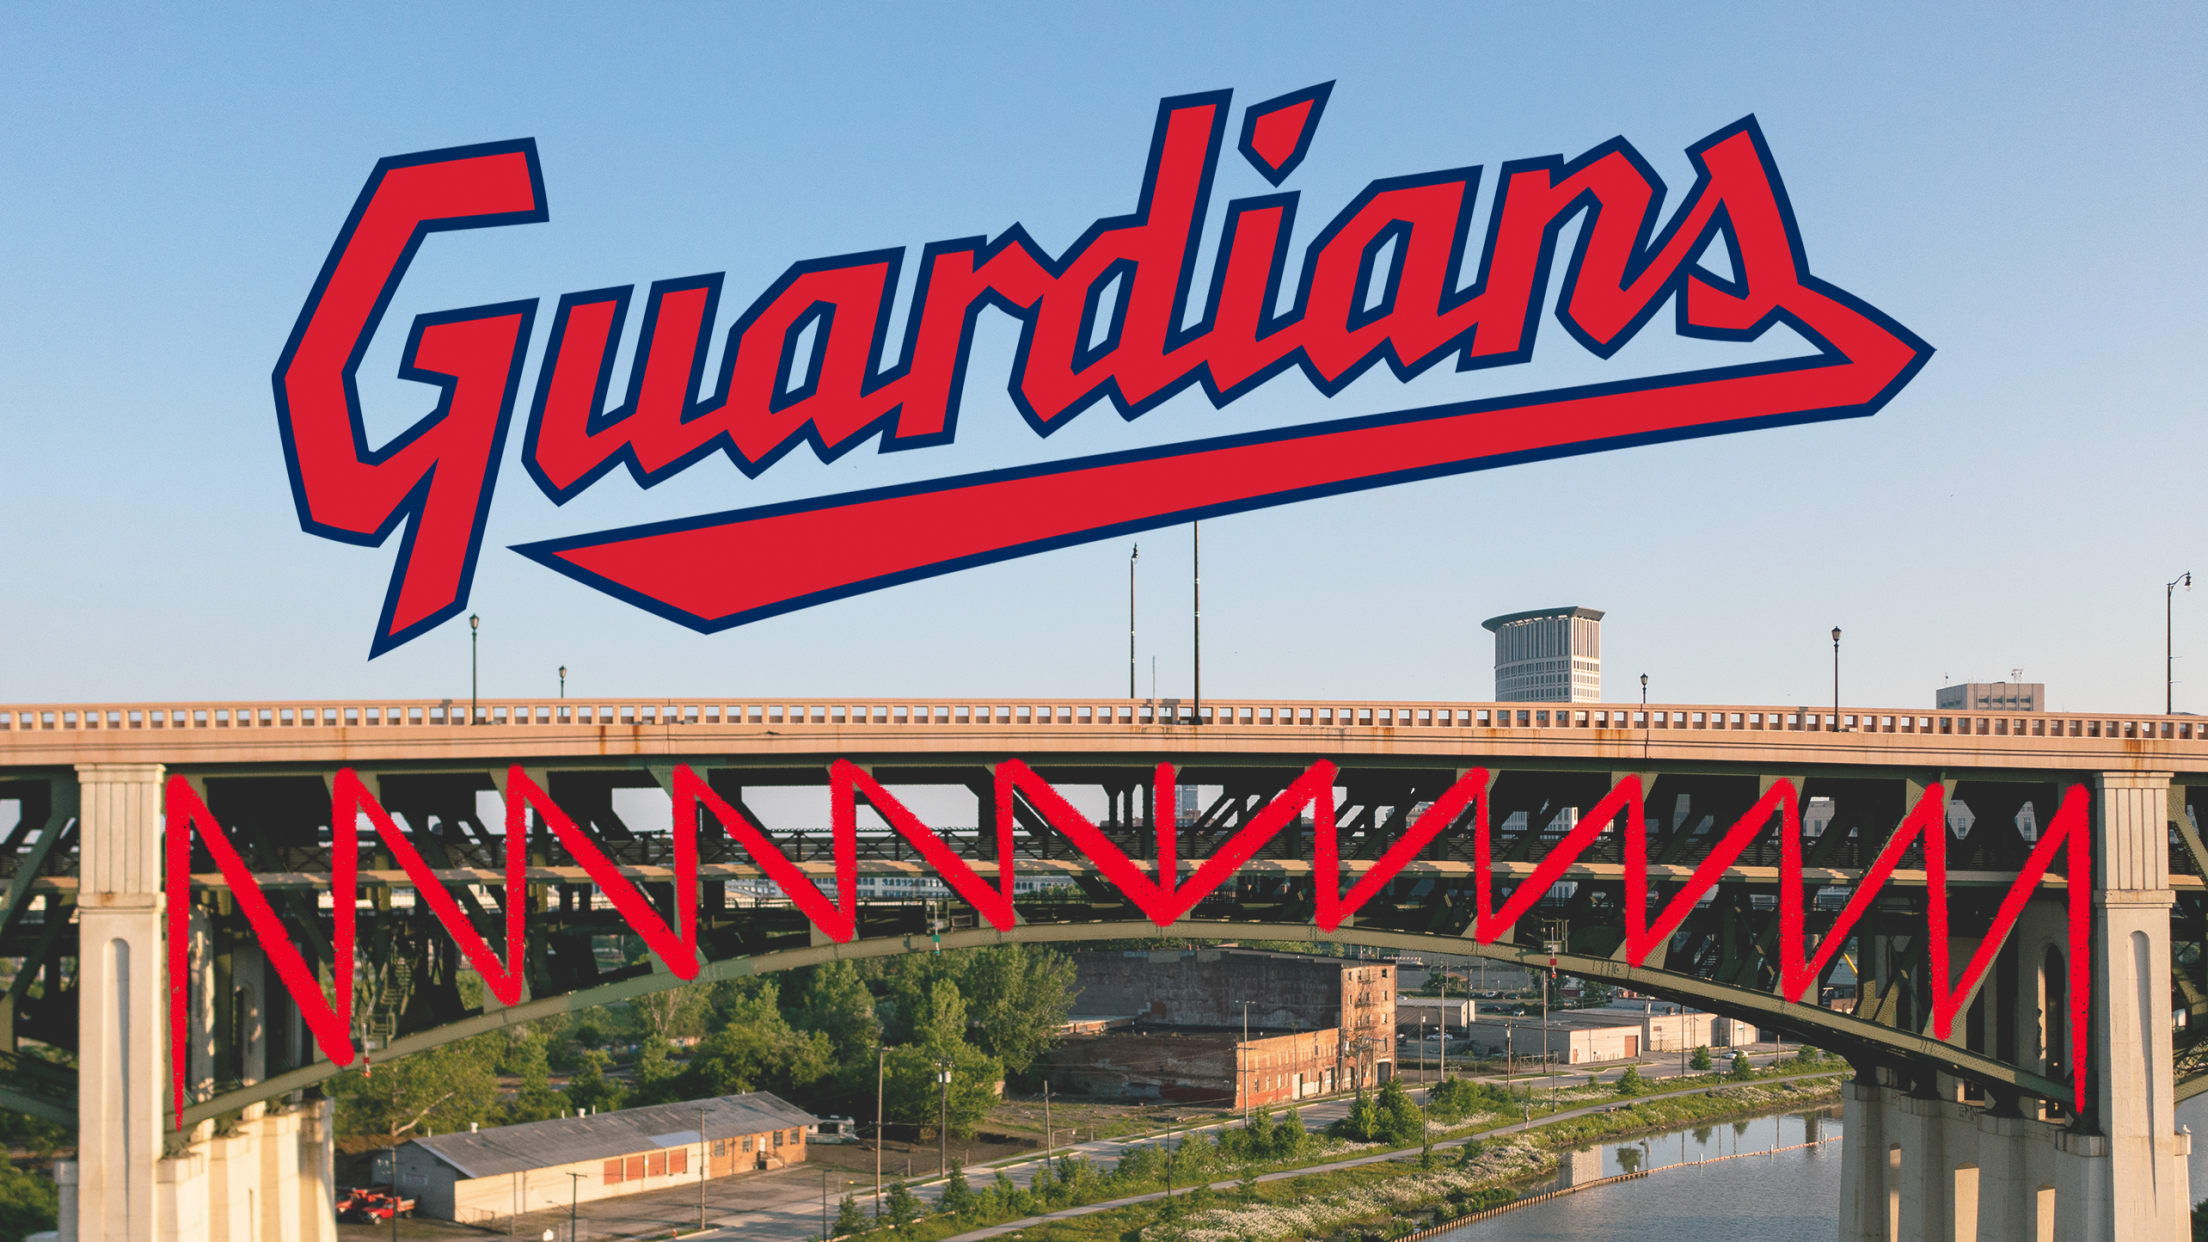 Behind the Cleveland Guardians: An Art-Deco Bridge - Bloomberg